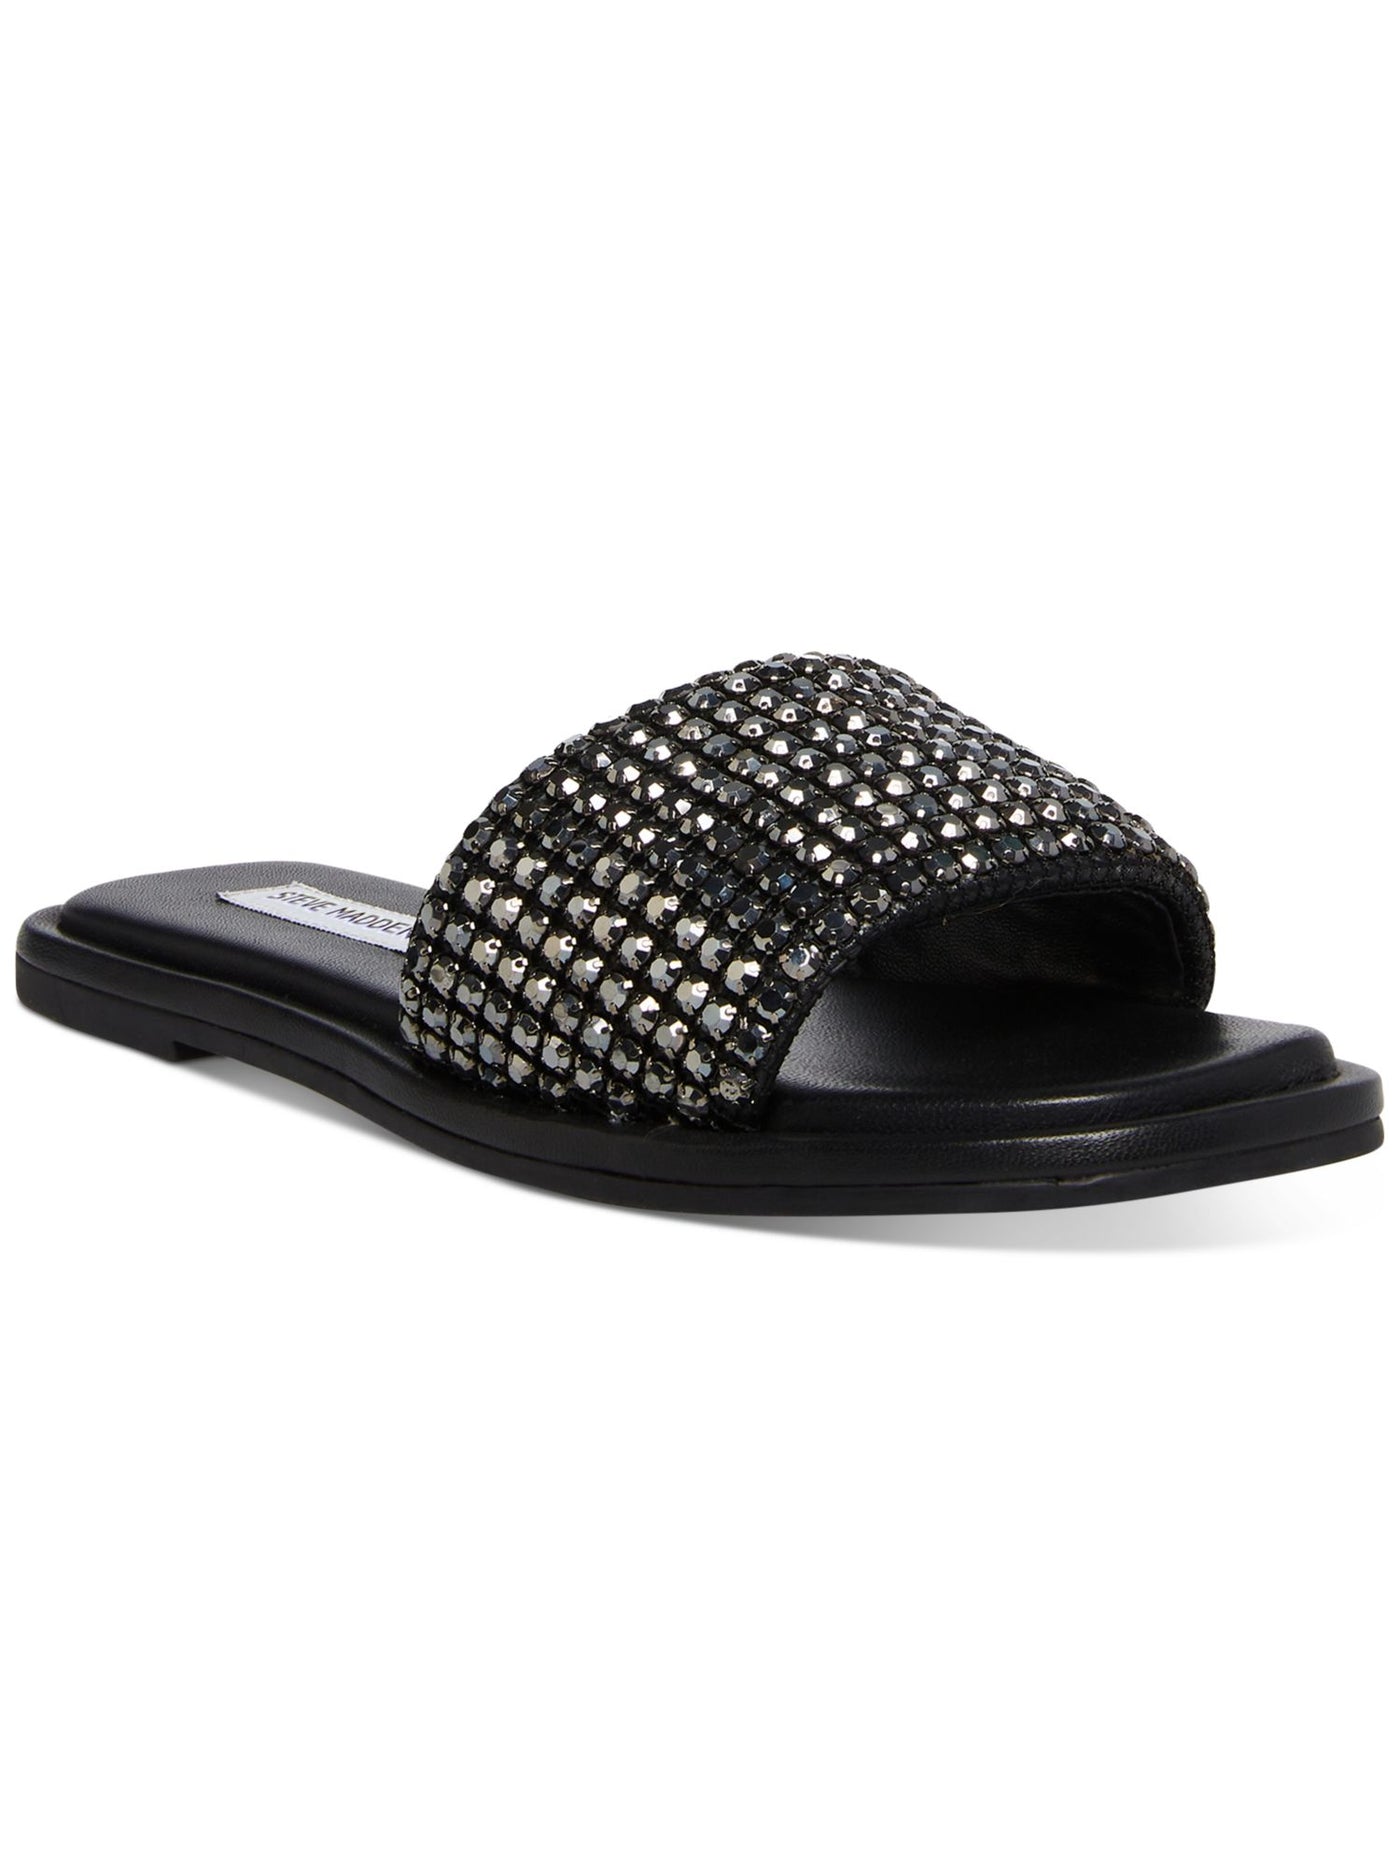 STEVE MADDEN Womens Black Padded Gem Accent Clyde-r Square Toe Slip On Leather Slide Sandals Shoes 5.5 M